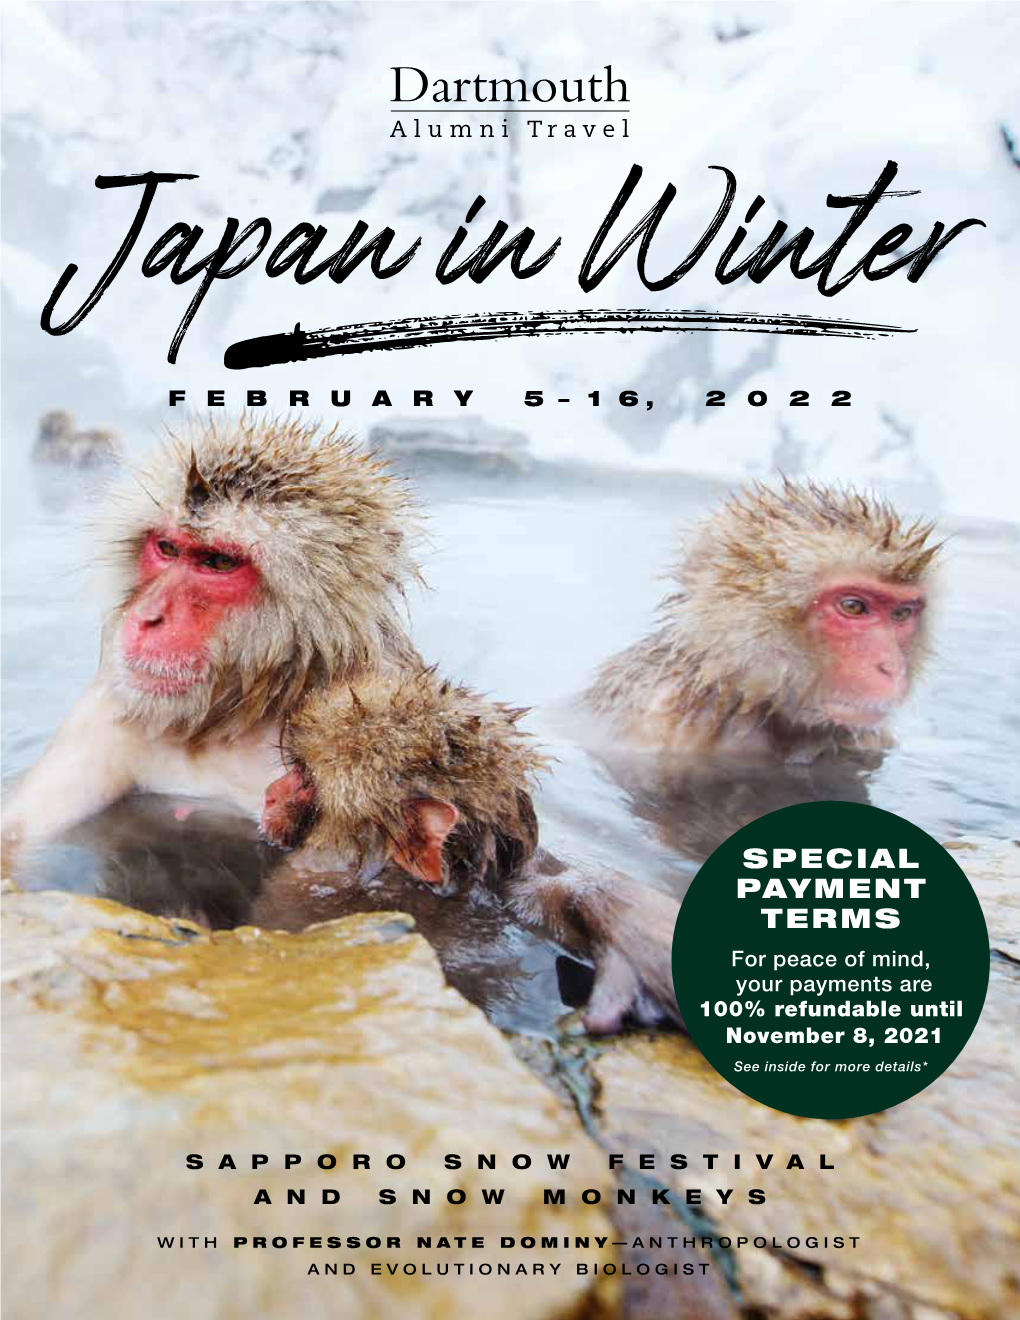 Dartmouth Winter Japan Brochure